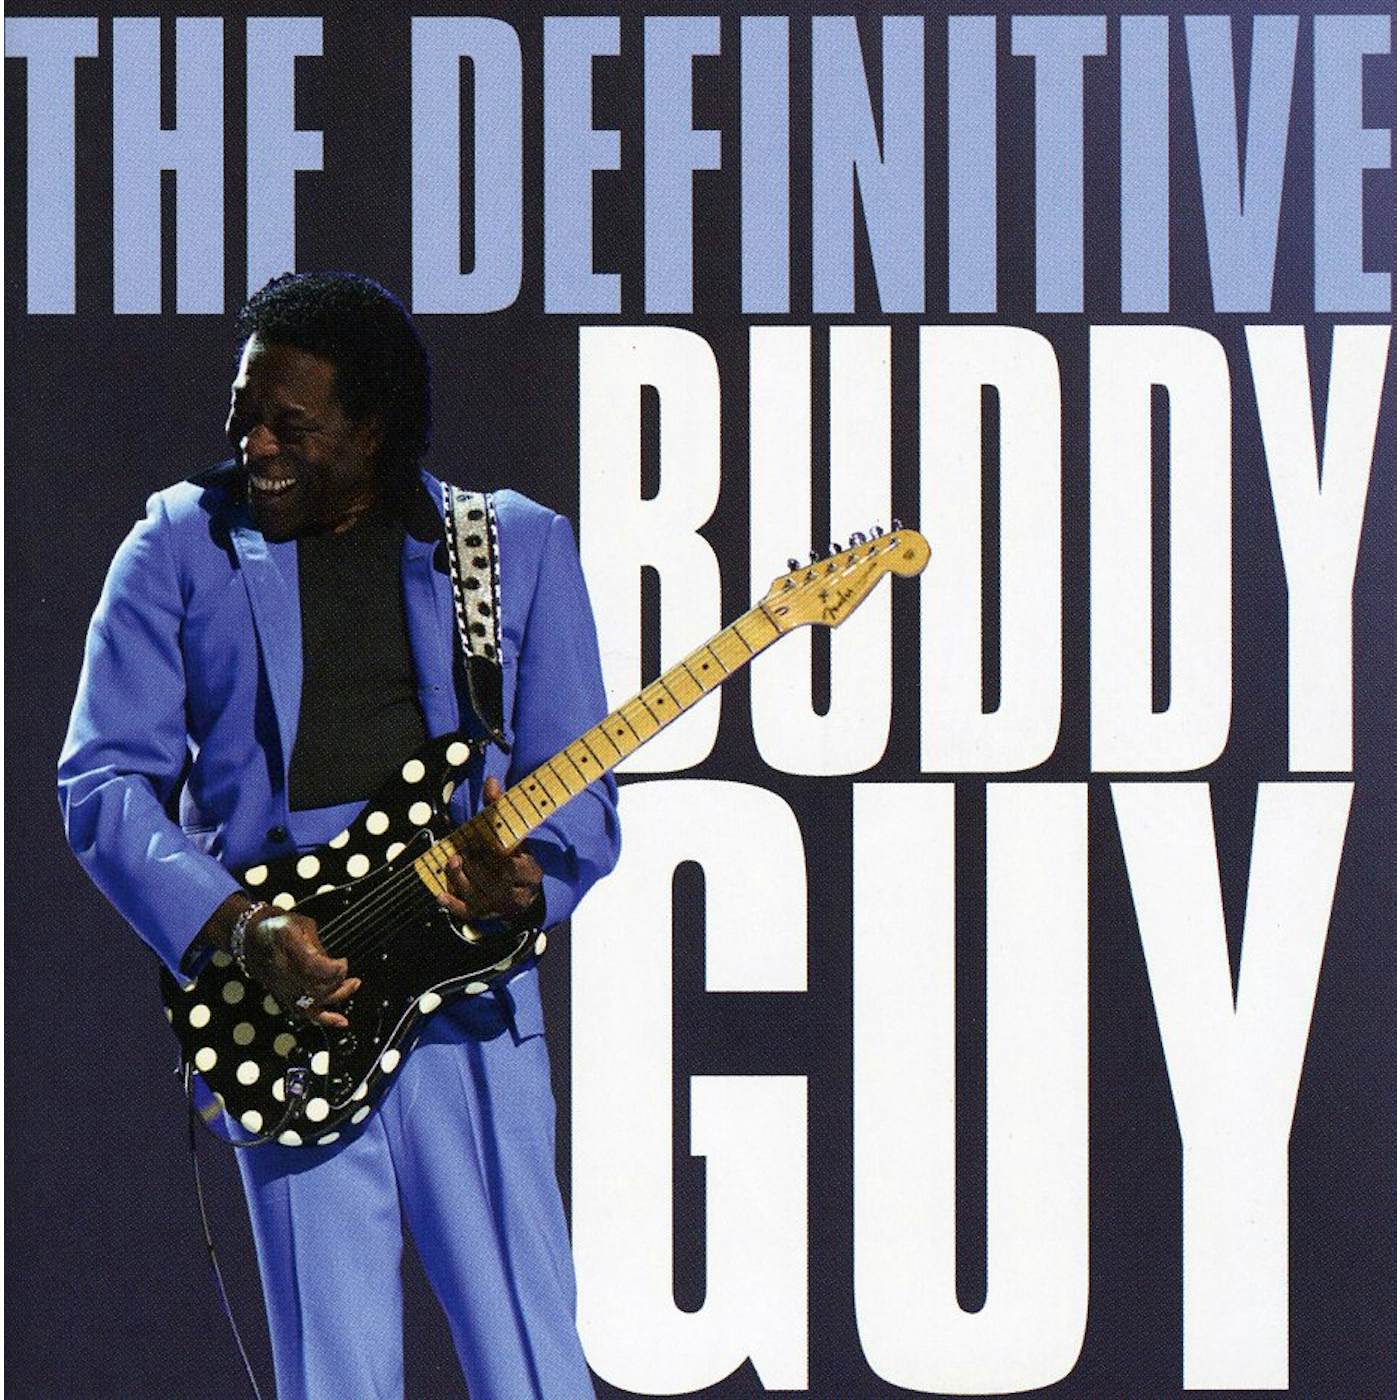 DEFINITIVE BUDDY GUY CD